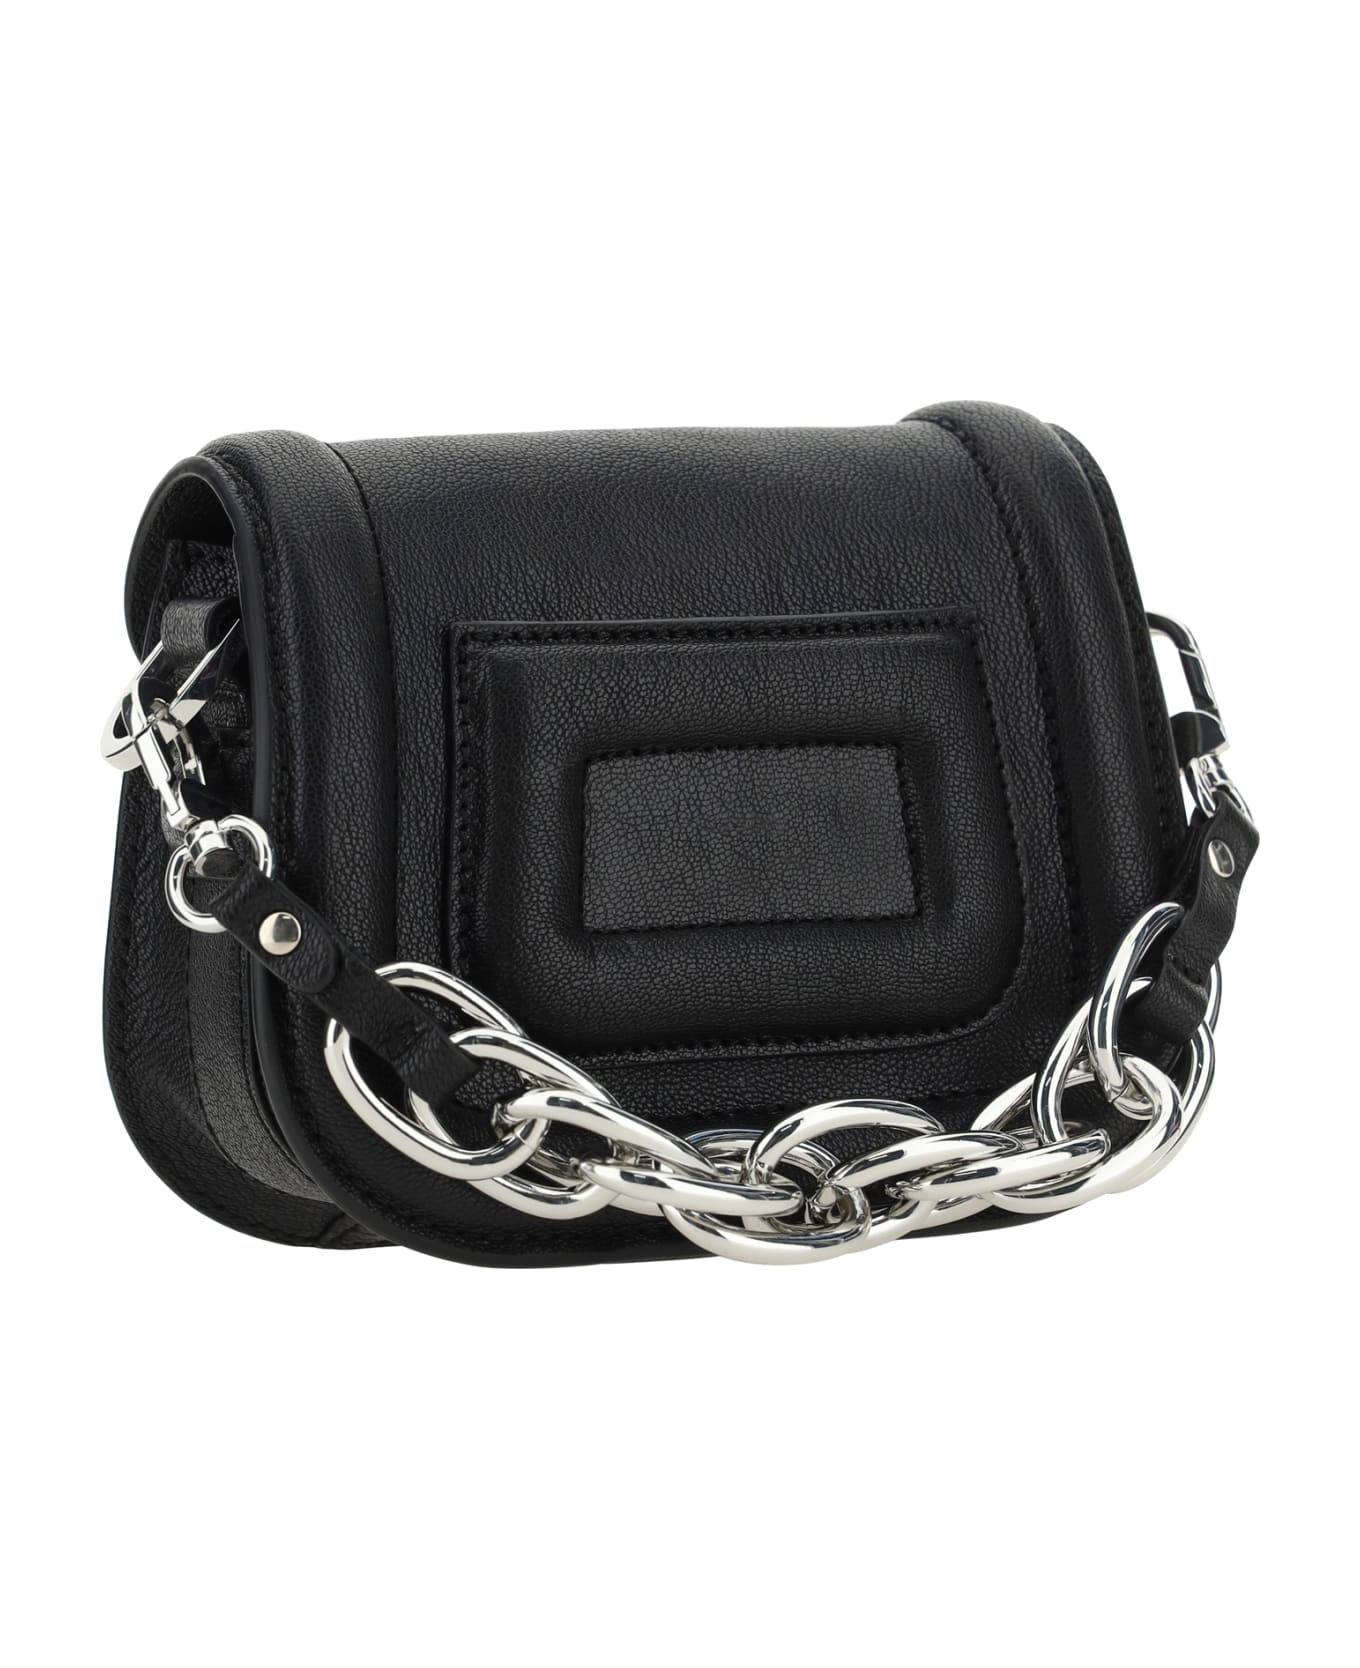 Pierre Hardy Alphaville Handbag - Black/silver